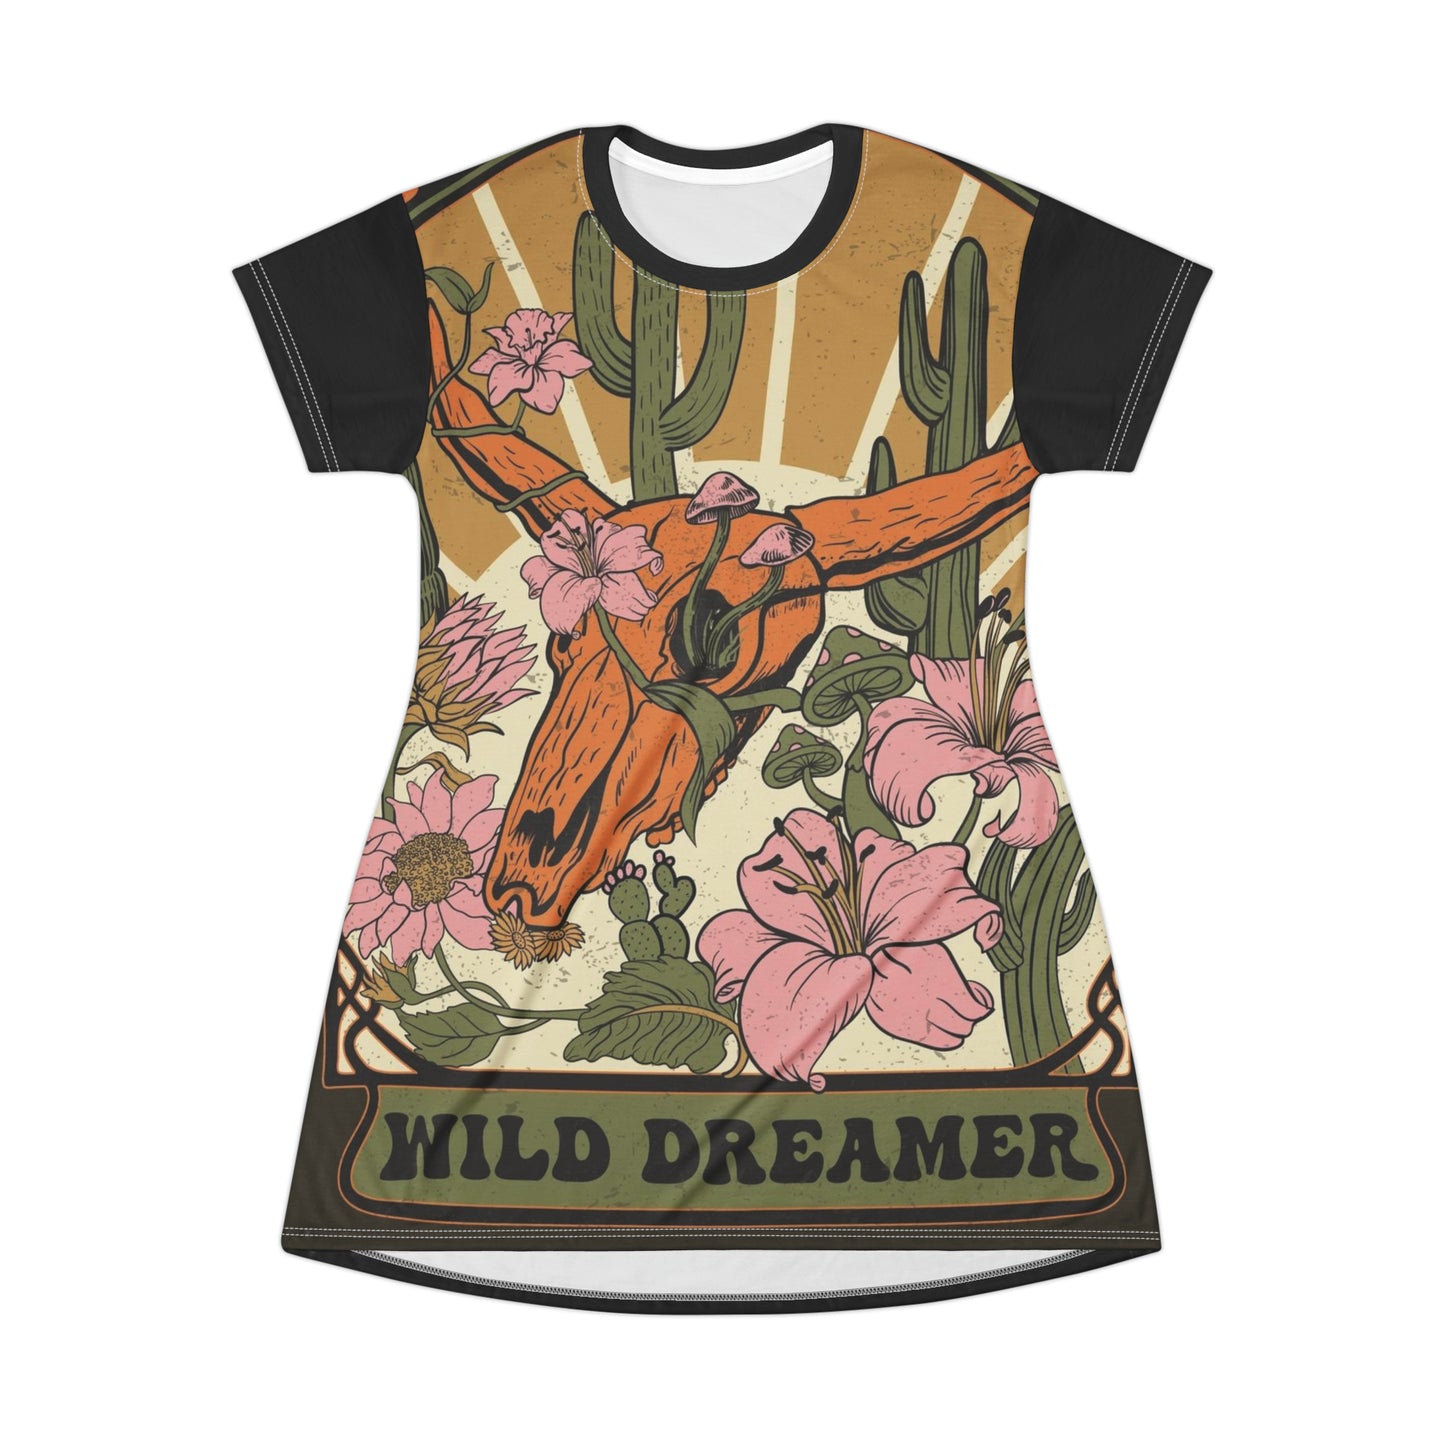 wild dreamer